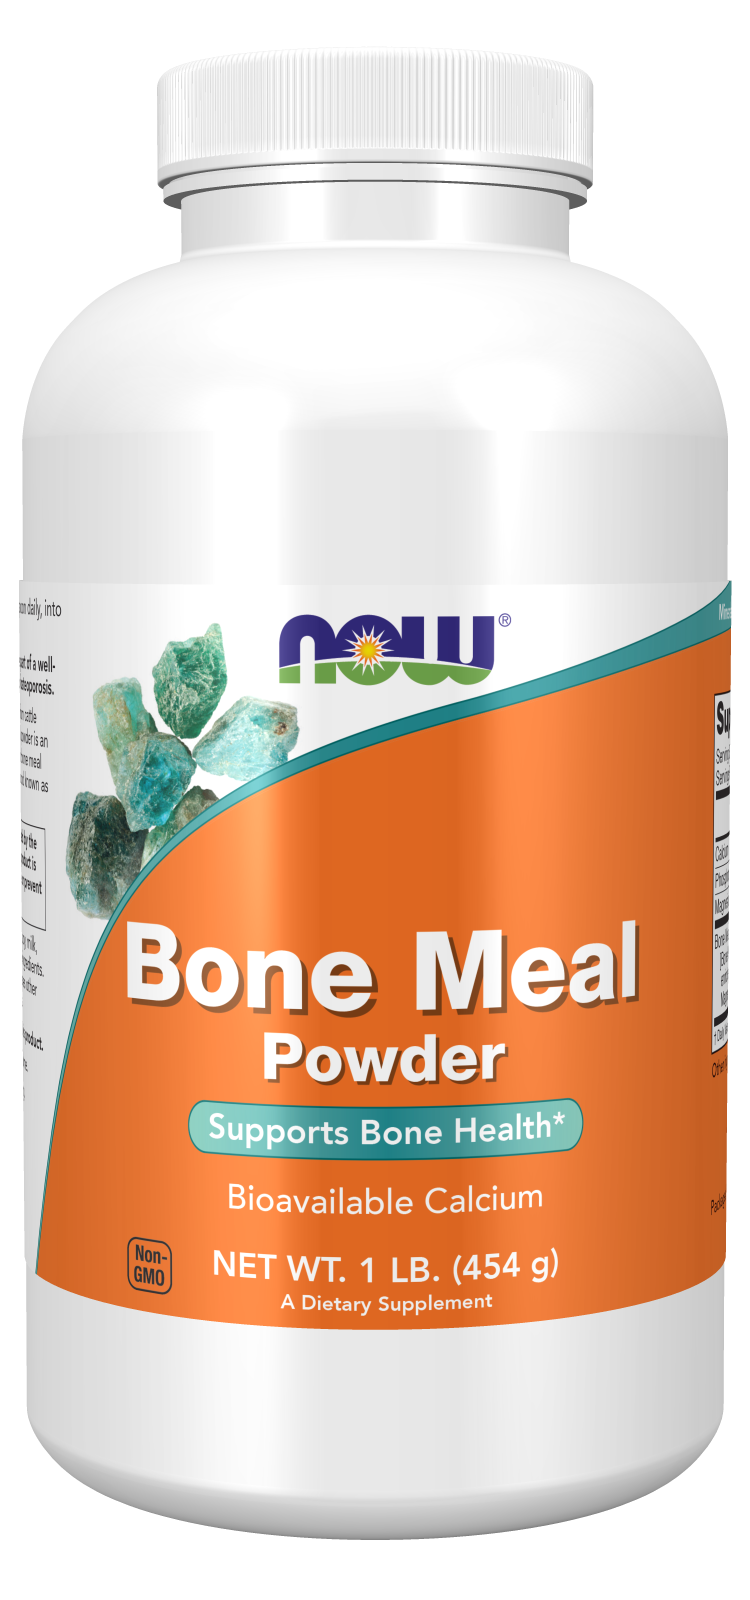 Bone Meal Powder - 1 LB. Bottle Front